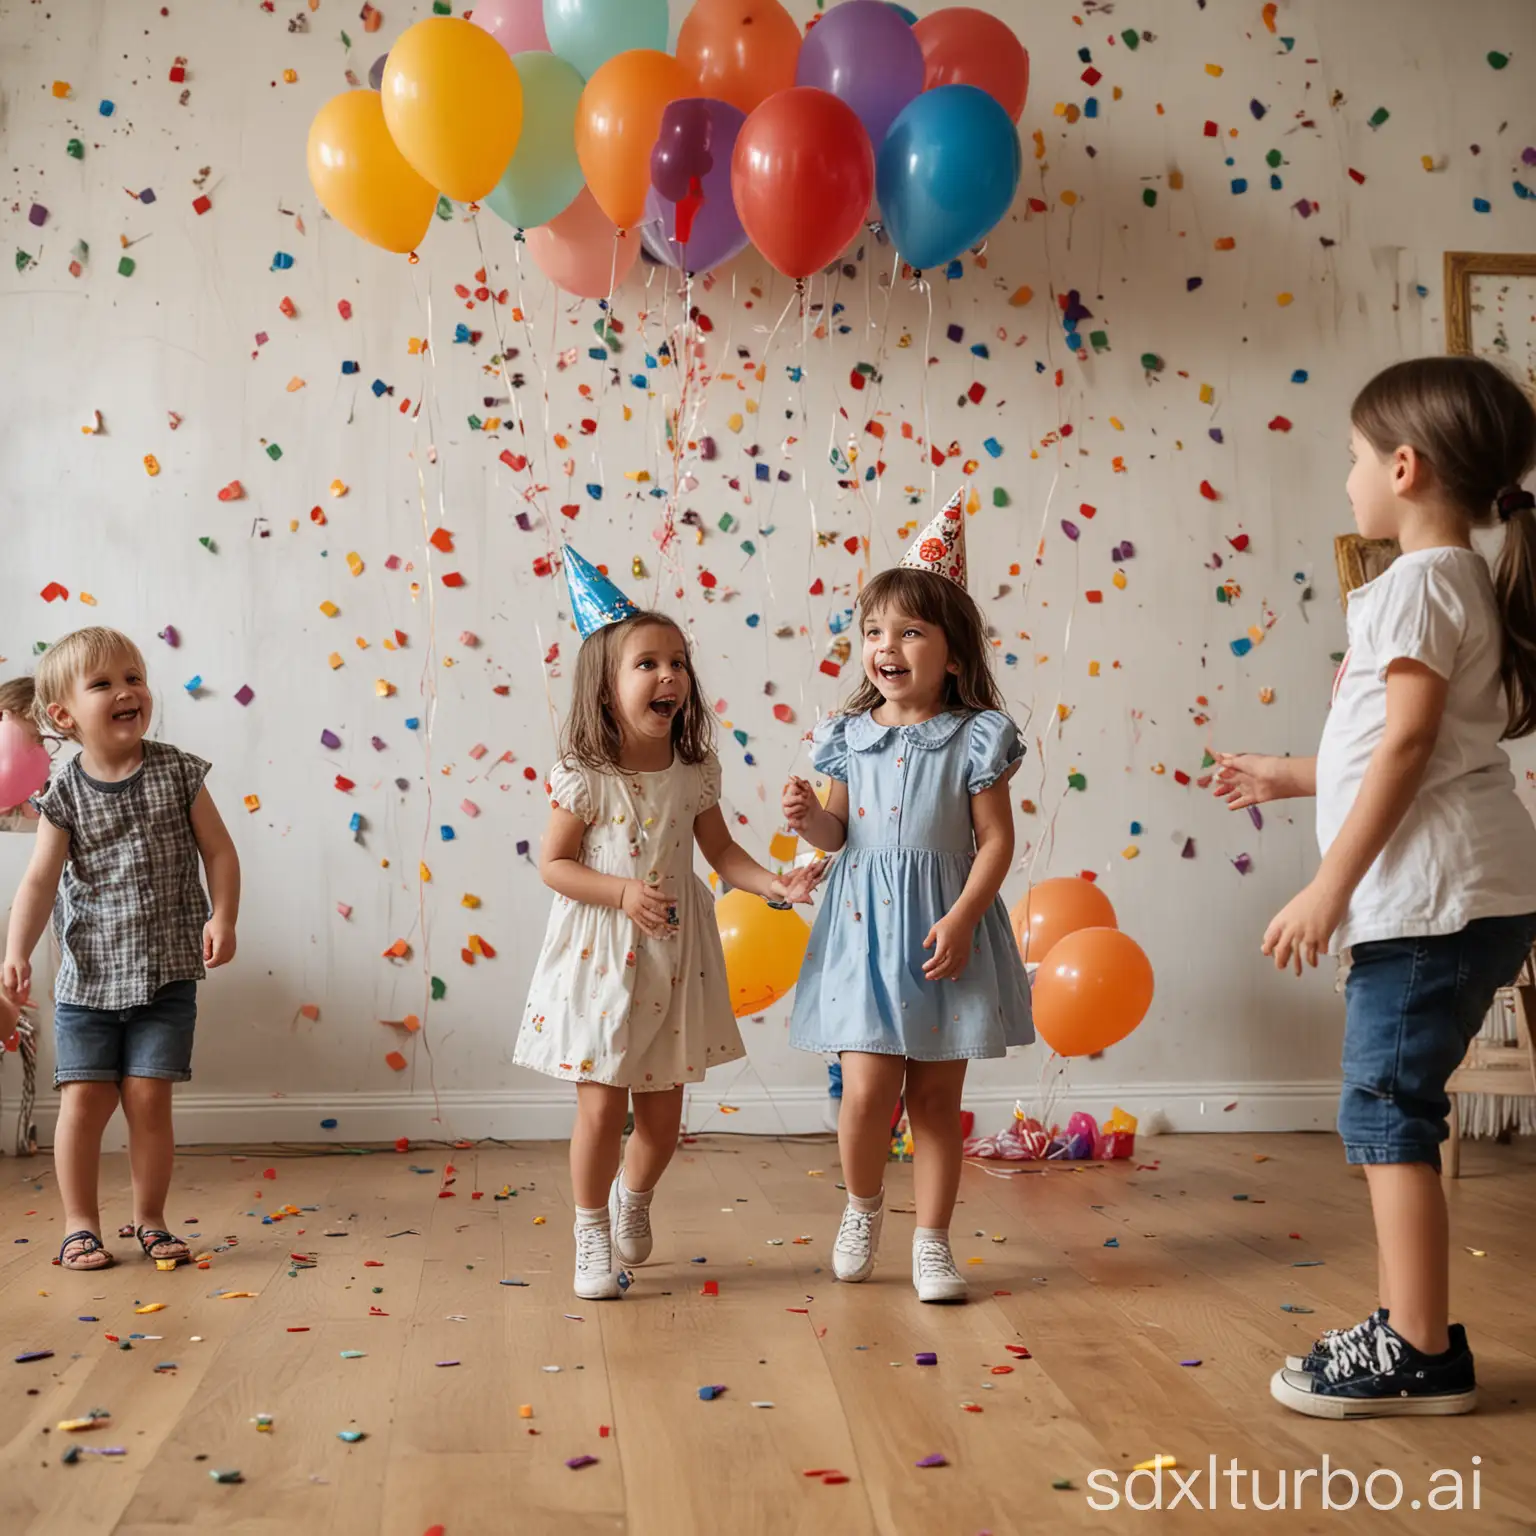 Joyful-Children-Celebrating-Birthday-Party-with-Cake-and-Balloons